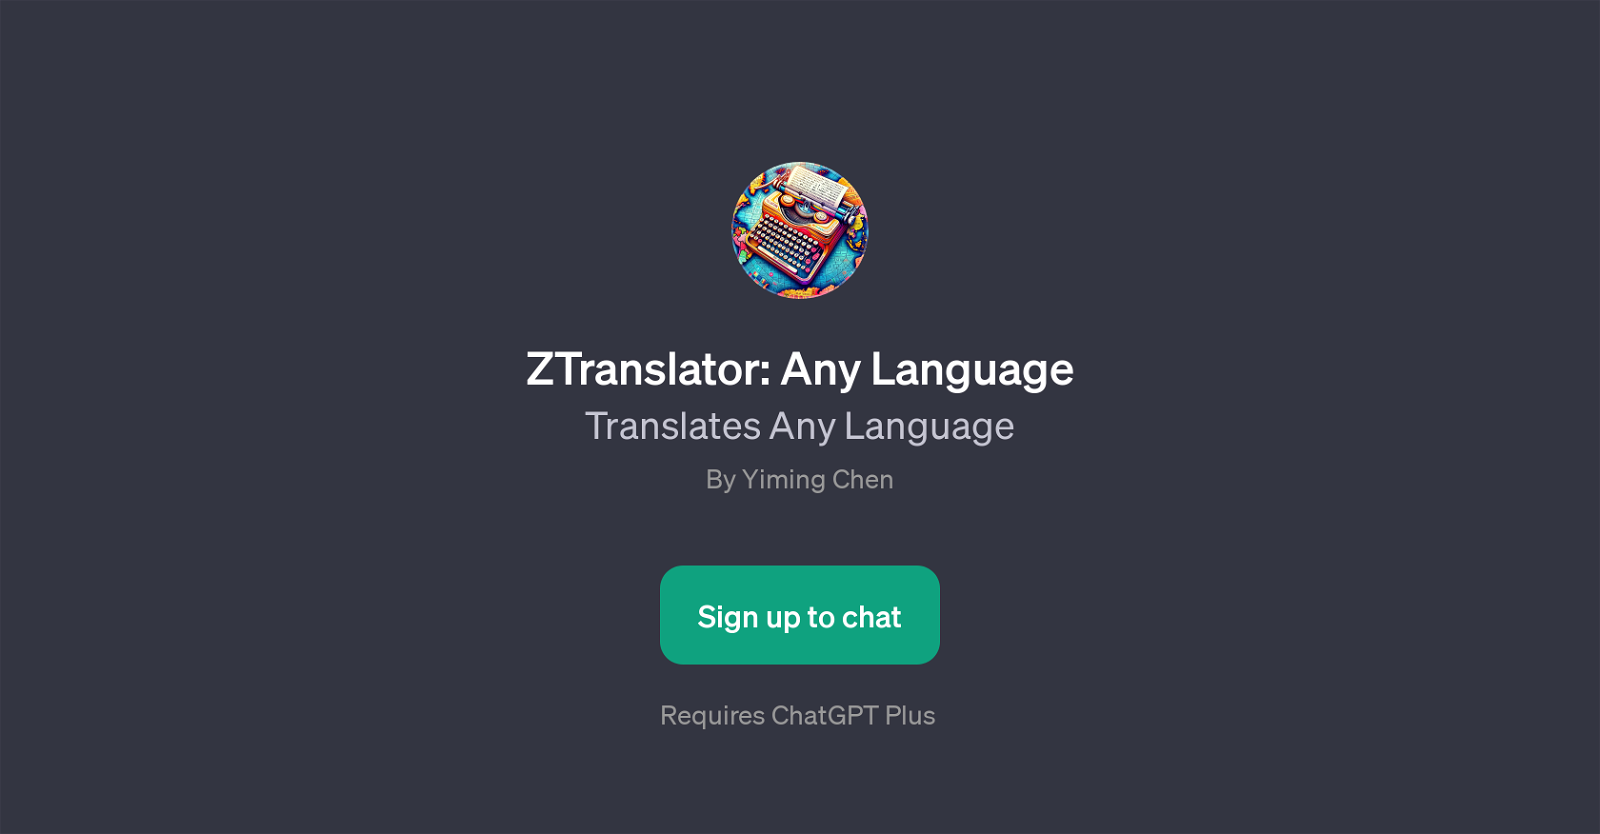 ZTranslator website